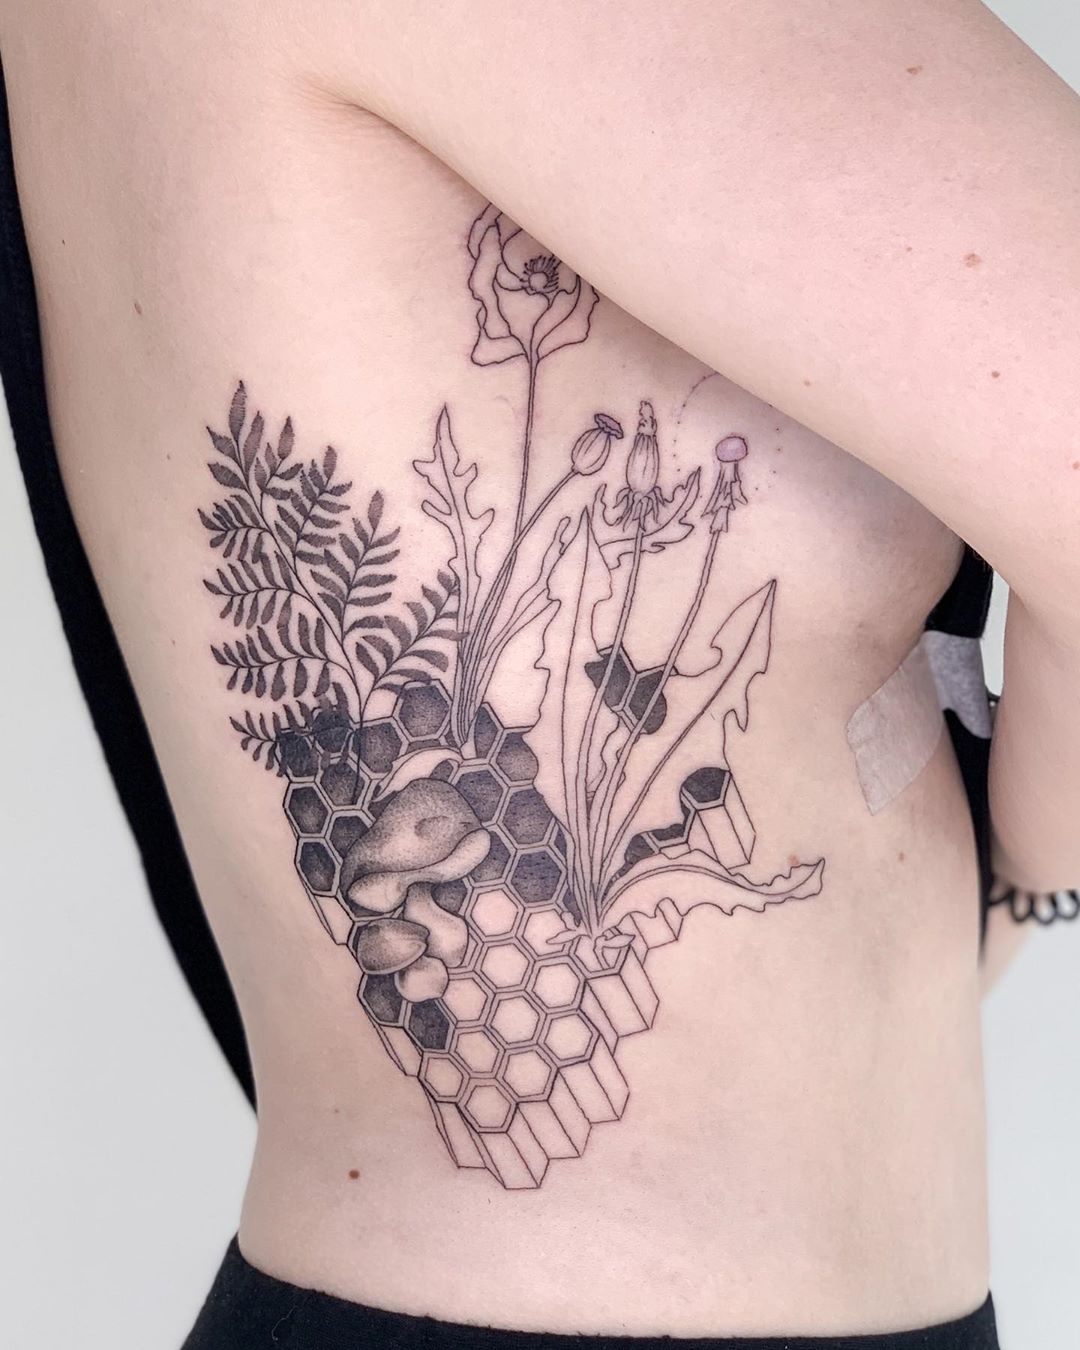 Wild Animals And Forest Tattoo On Full Sleeve by Justyna Kurzelowska